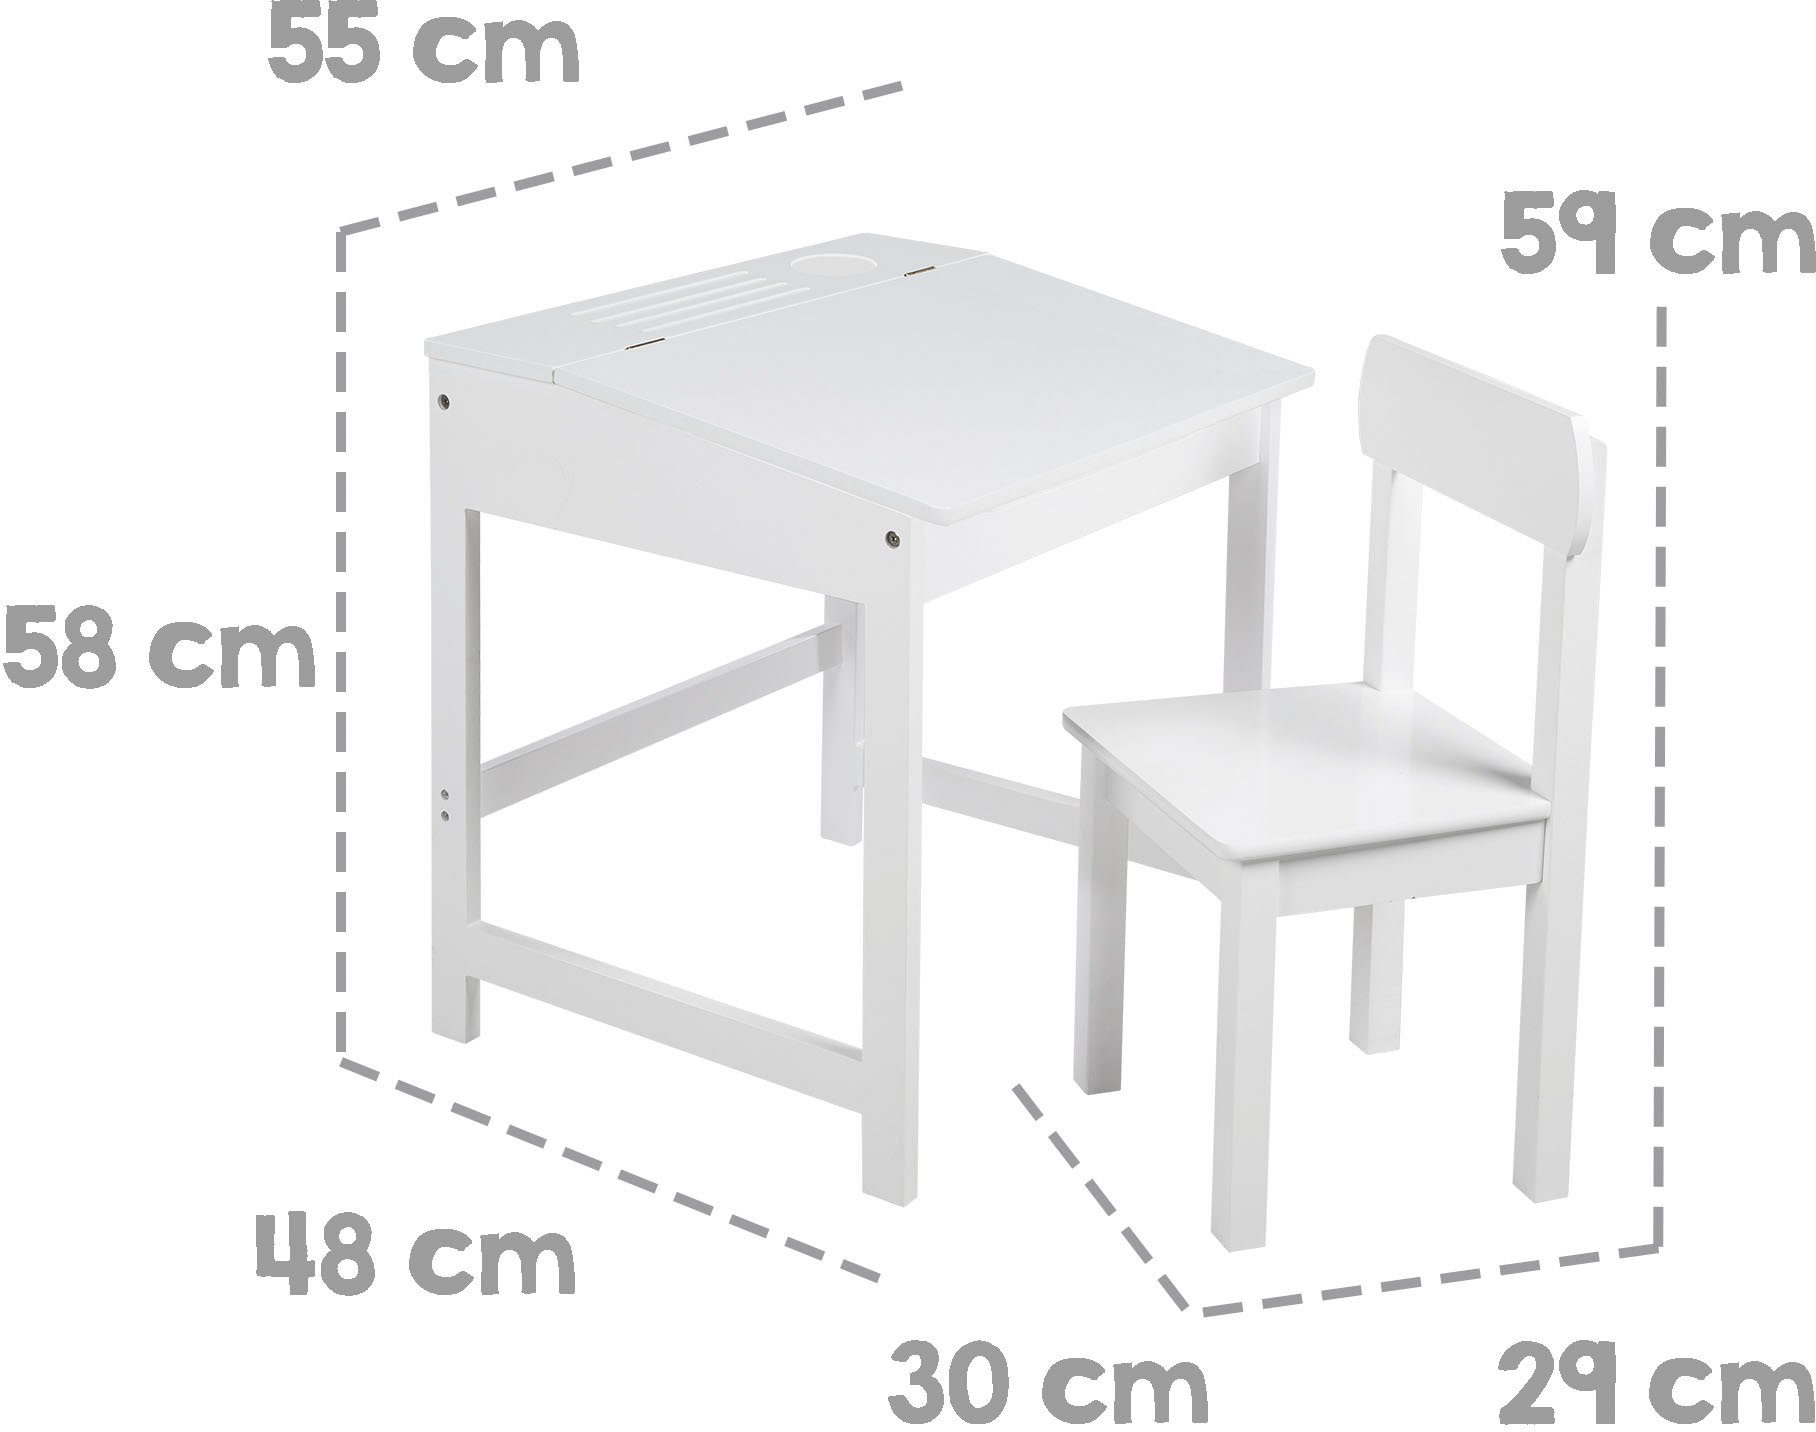 Stuhl roba® weiß, Kinderschreibtisch Schulpult, inkluisve